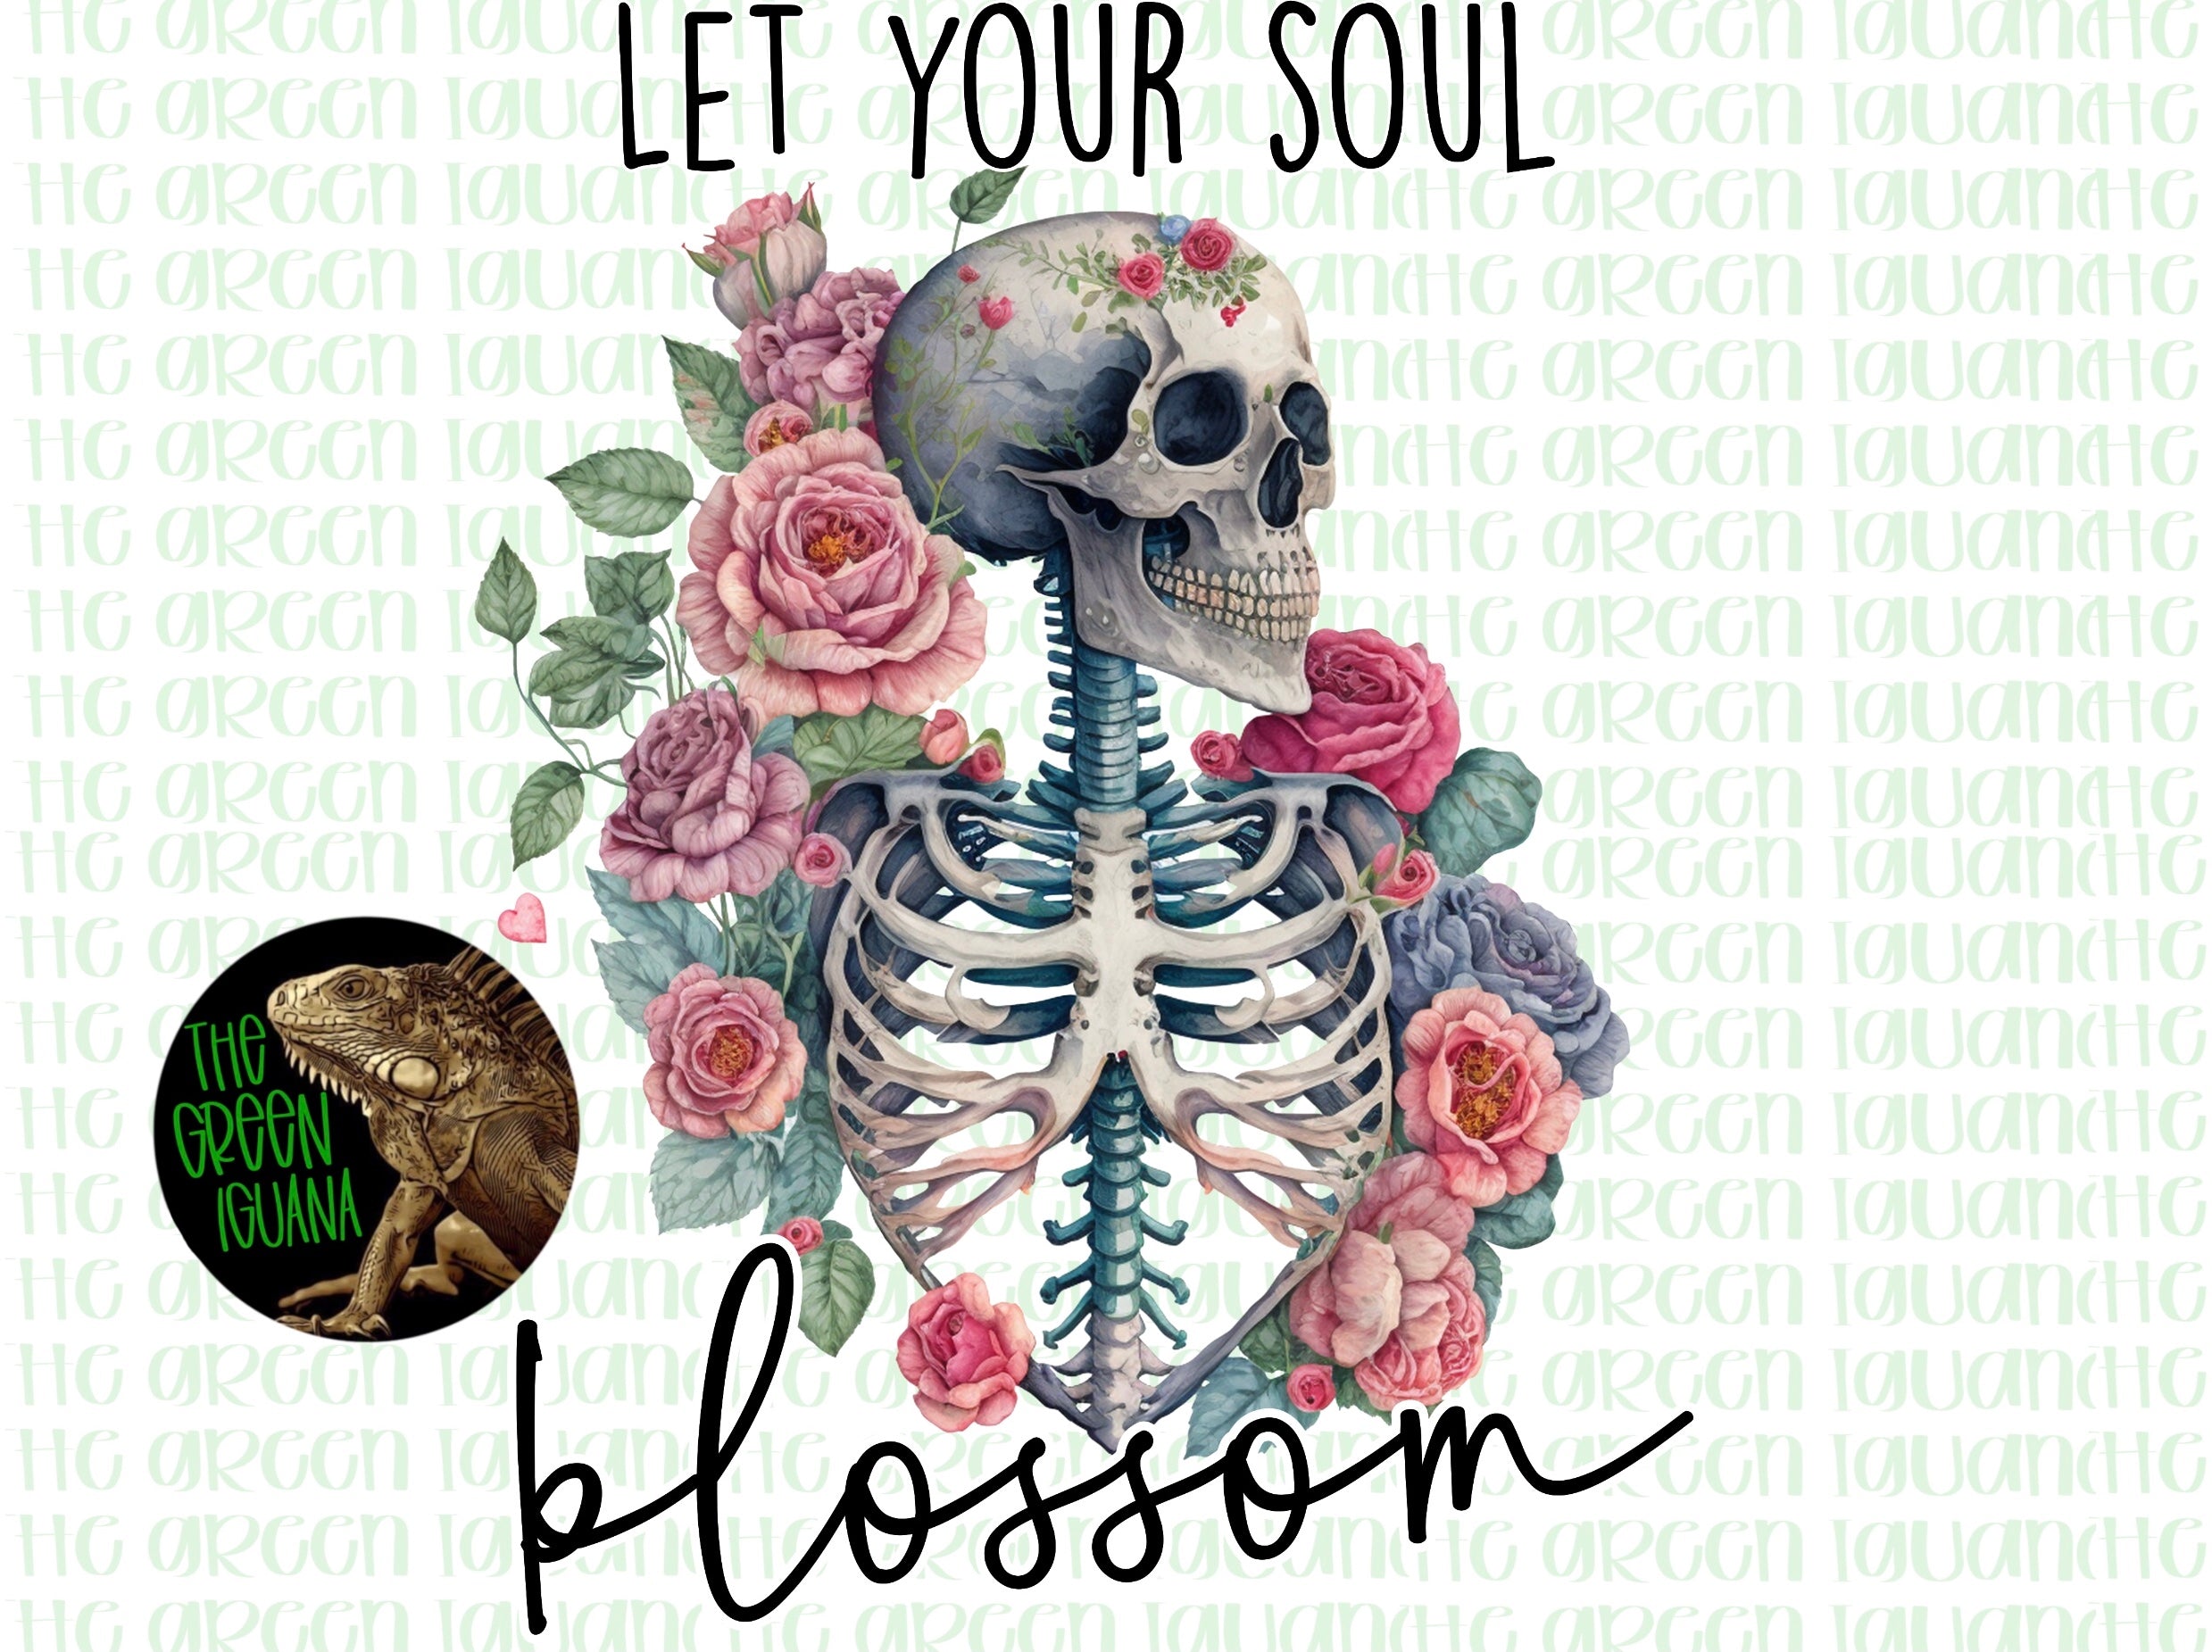 Let your soul blossom